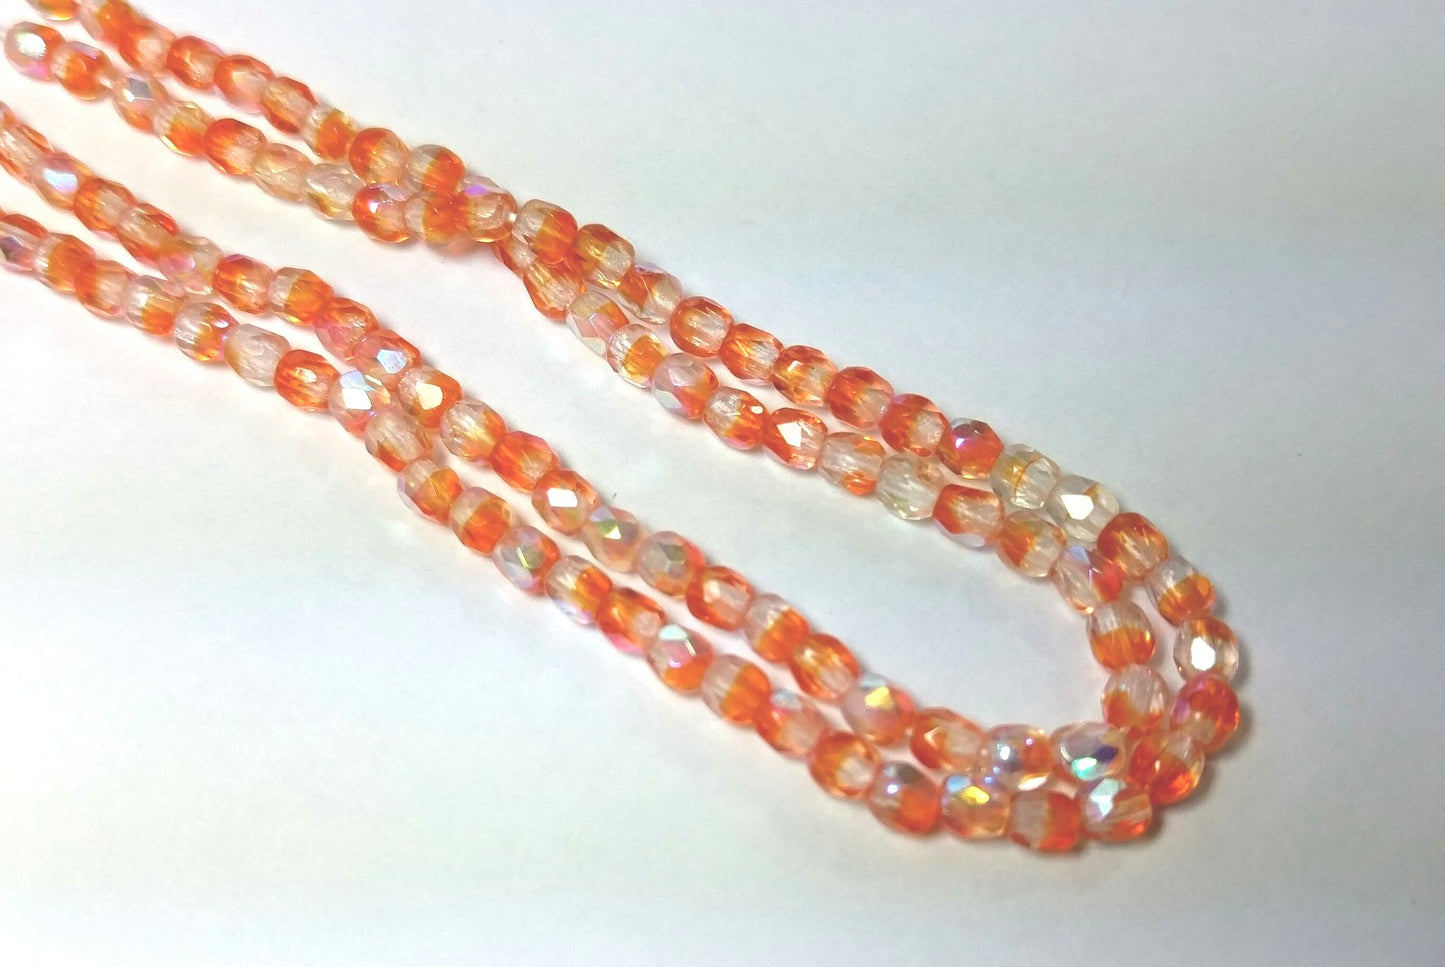 One Strand of Czech Glass Beads-3mm